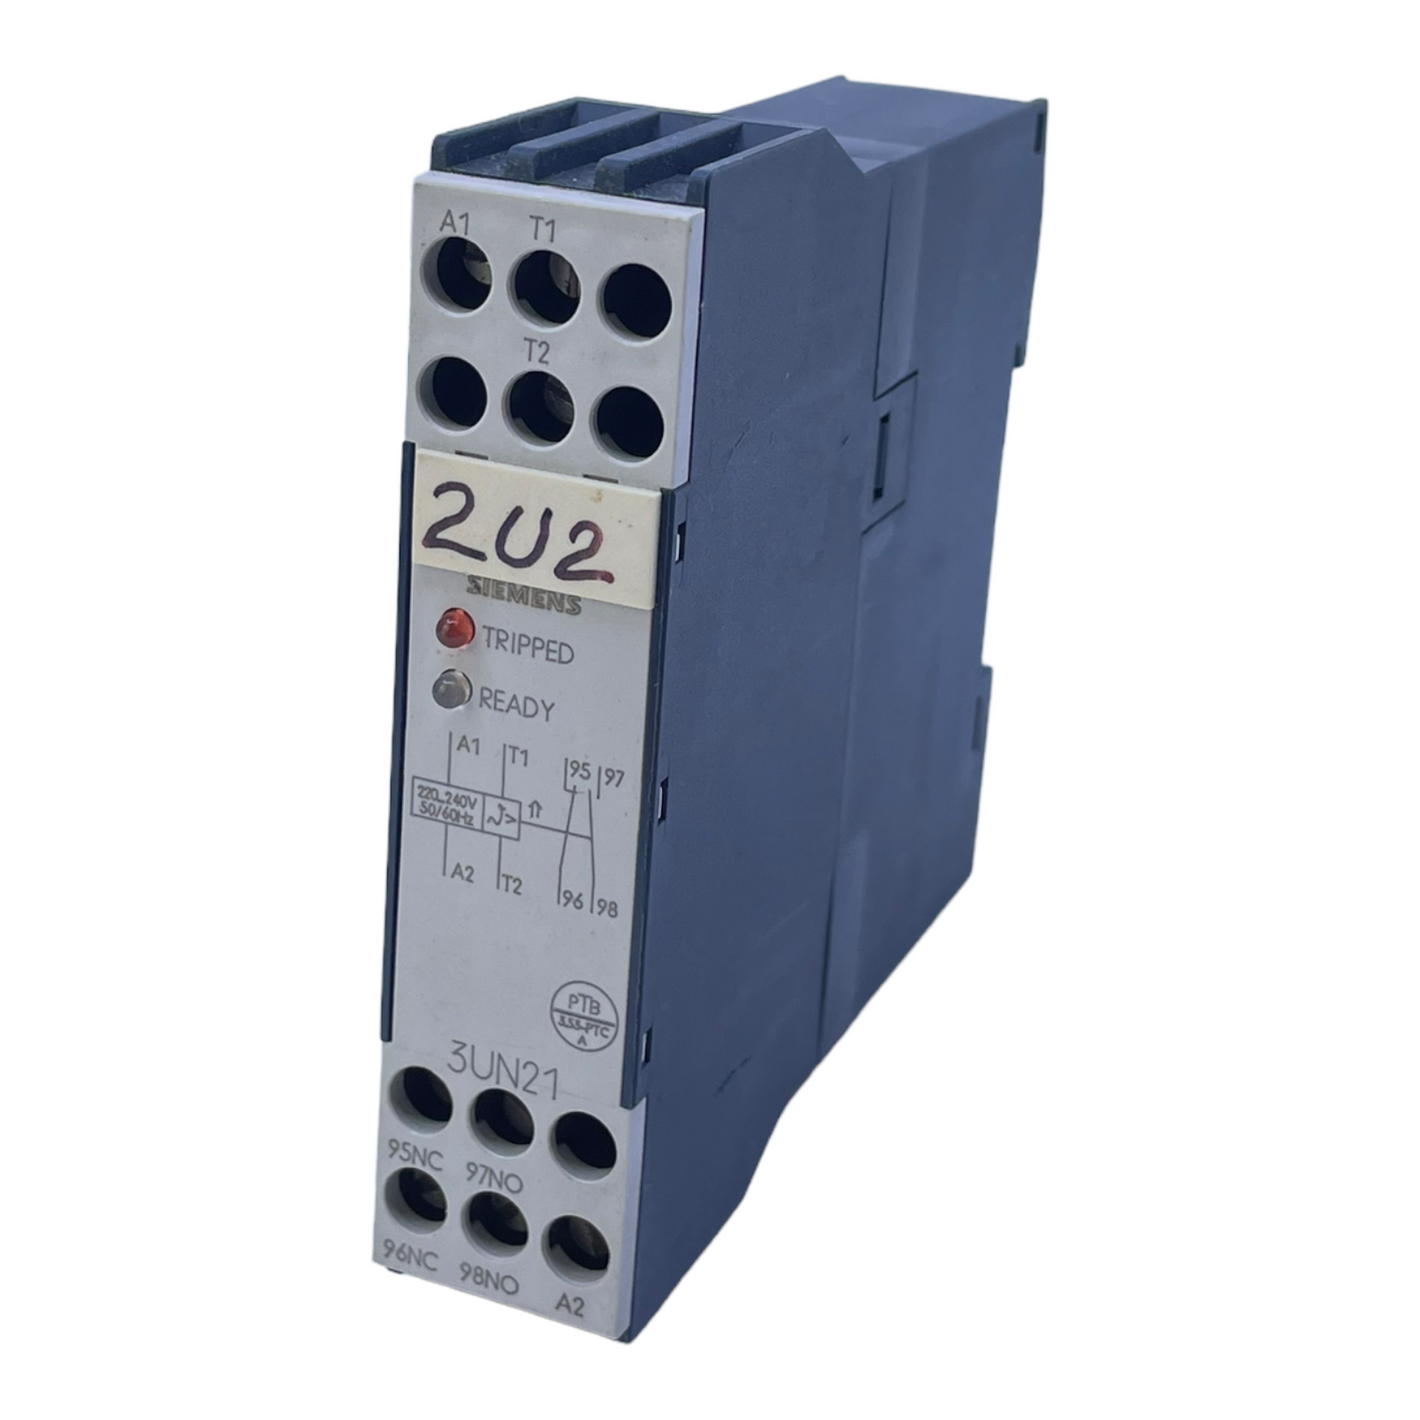 Siemens 3UN2100-0AN7 motor protection relay 220…240V 50/60Hz